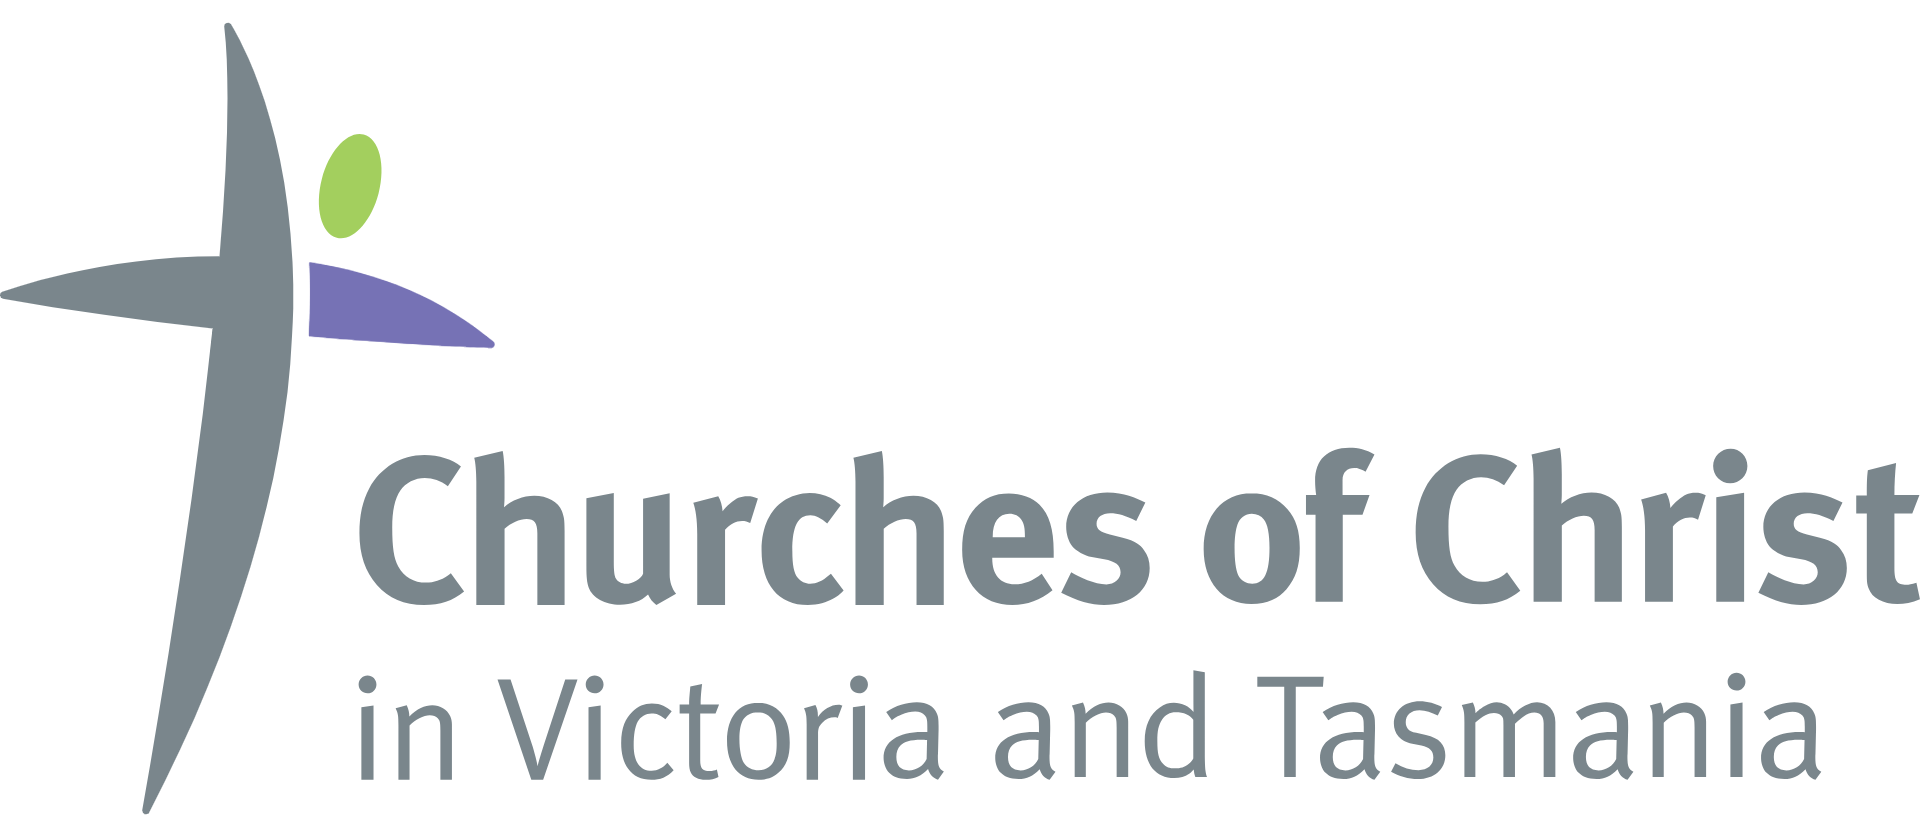 Churches of Christ Care - Victoria